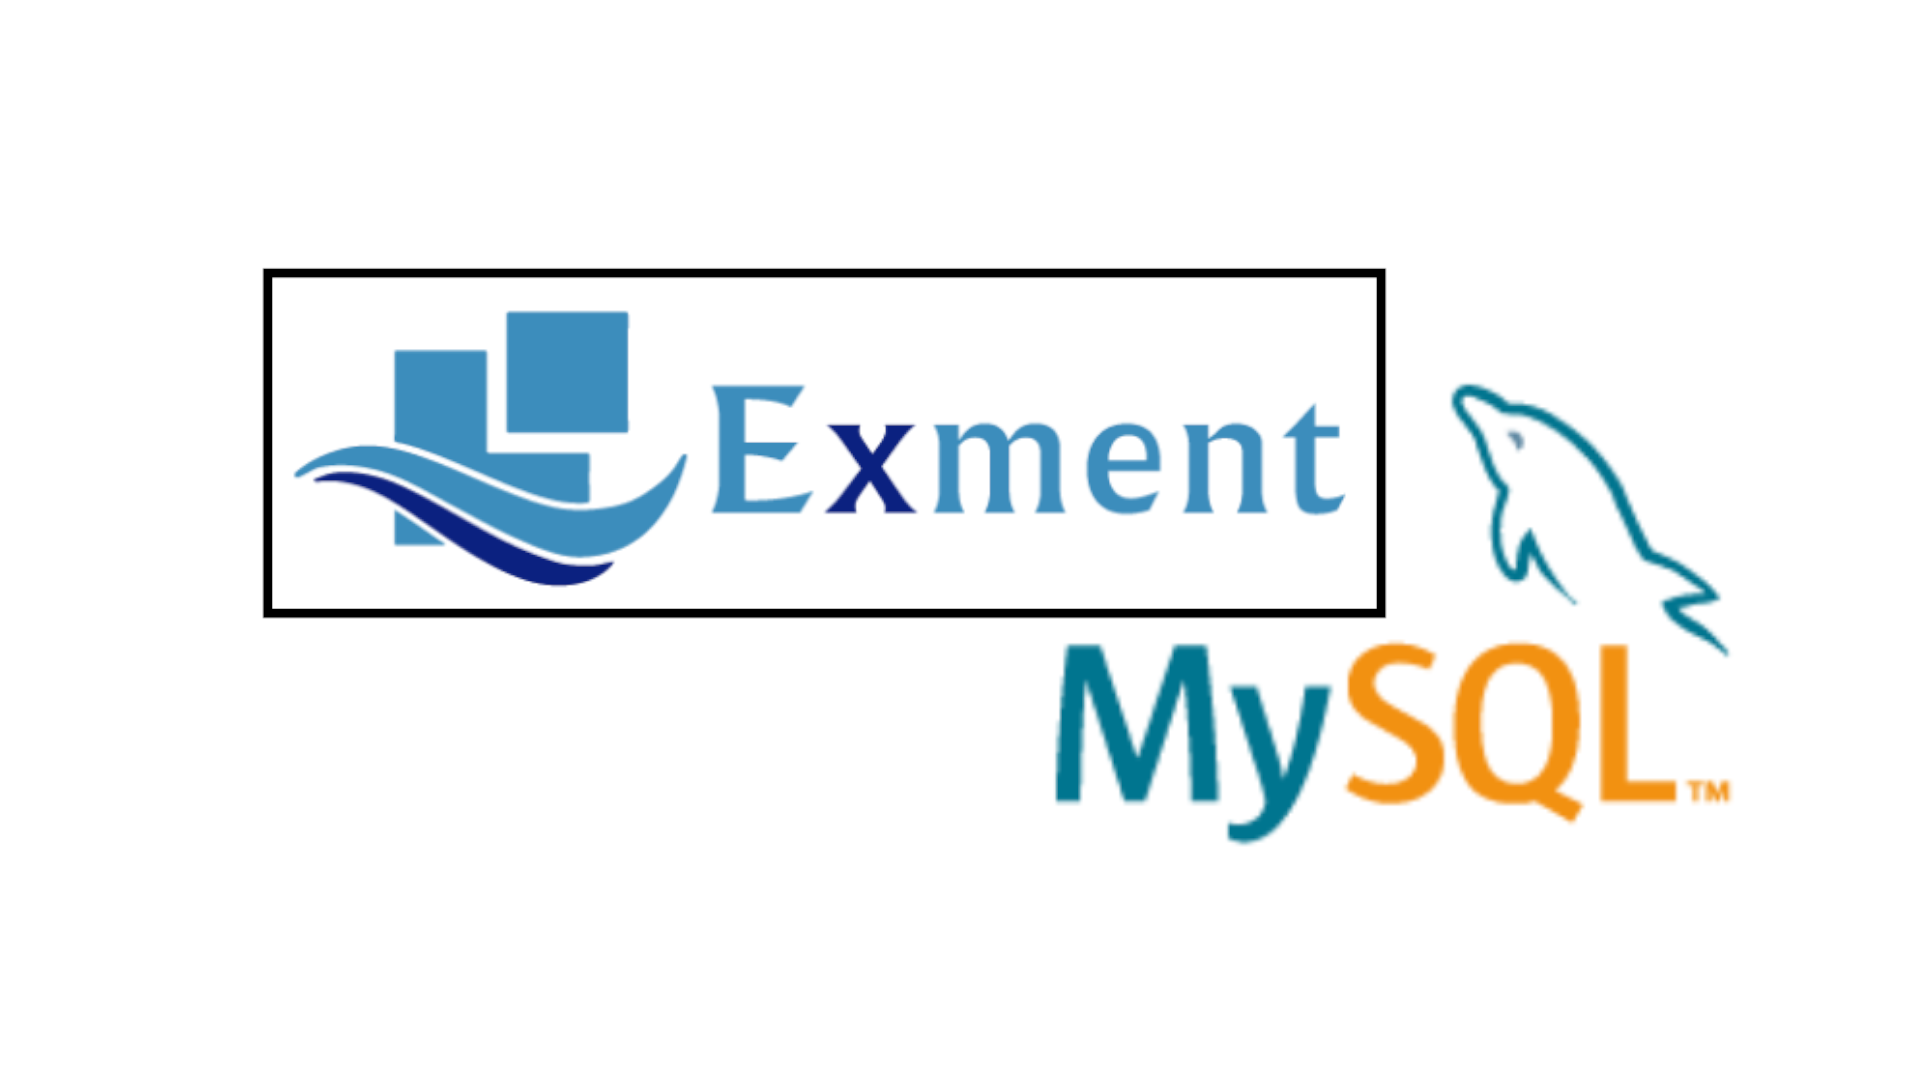 Exment powered by MySQL